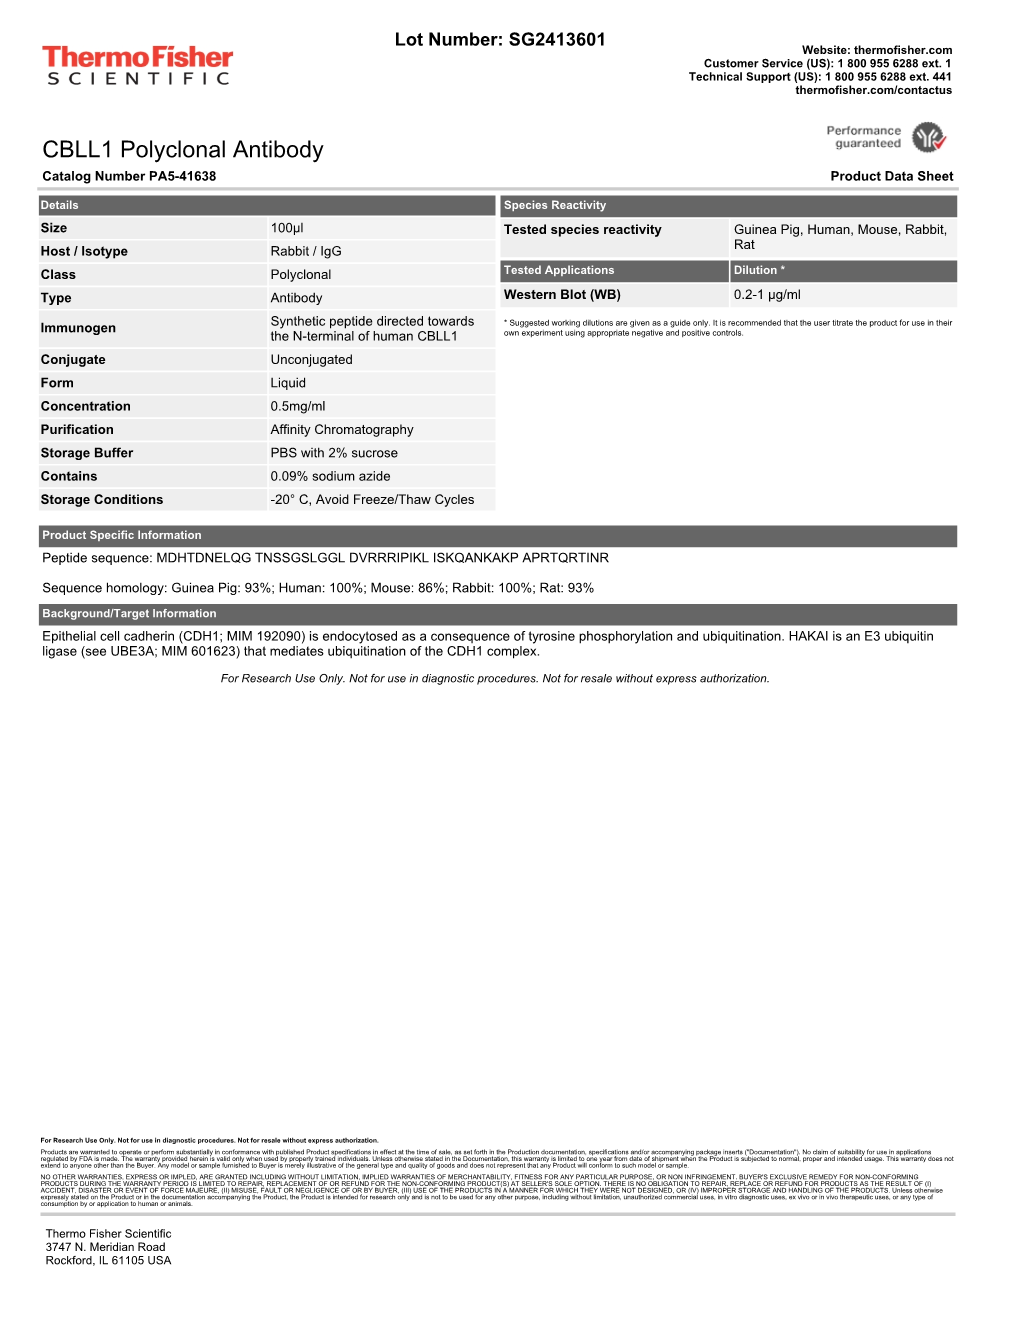 CBLL1 Polyclonal Antibody Catalog Number PA5-41638 Product Data Sheet